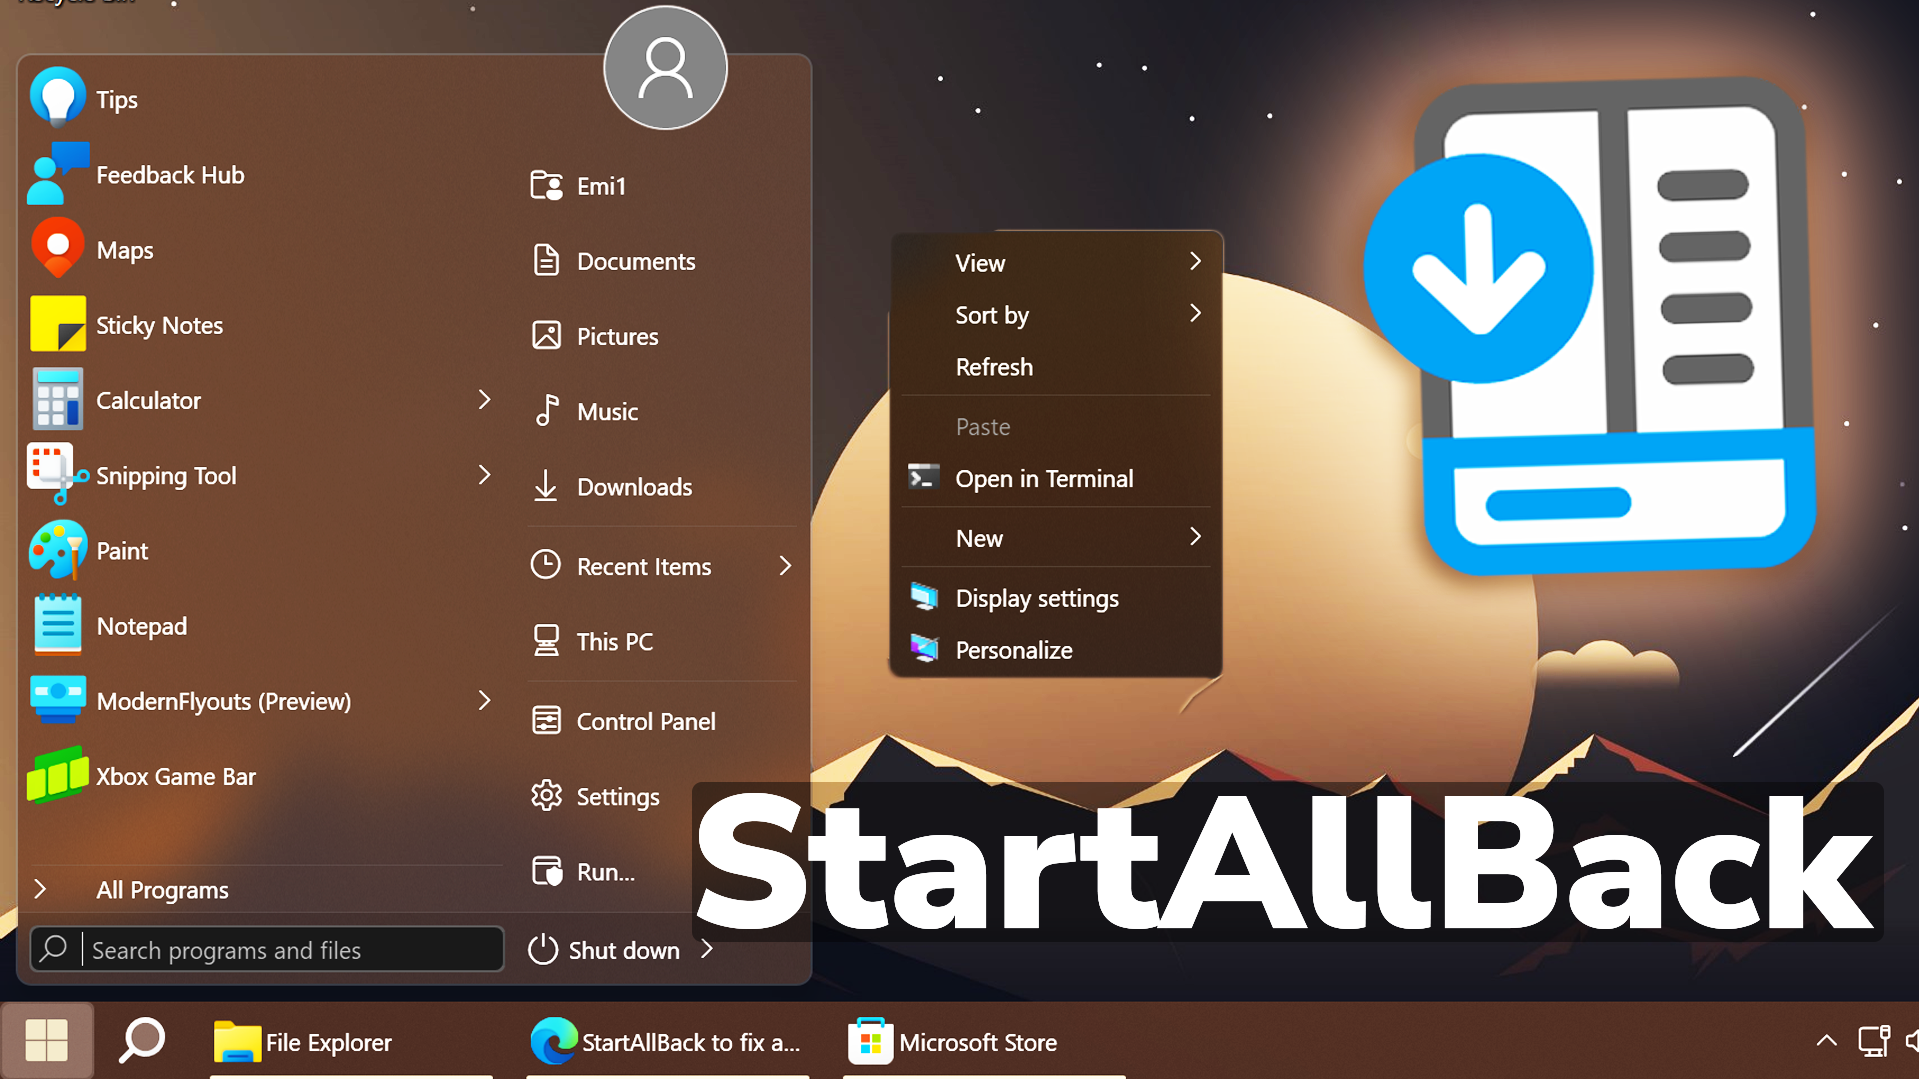 StartAllBack 3.6.10 instal the last version for windows